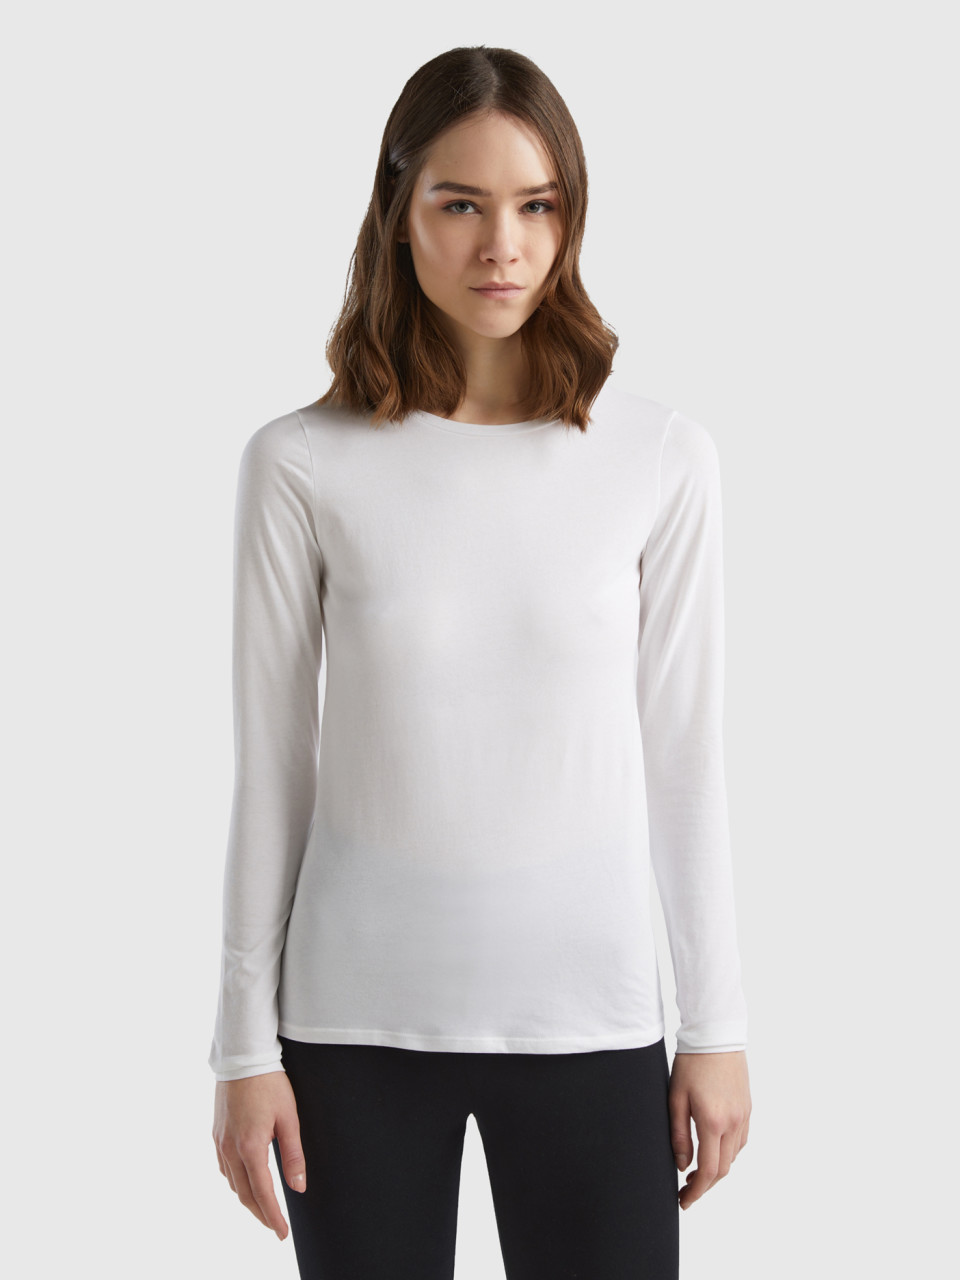 Benetton, Long Sleeve Super Stretch T-shirt, White, Women